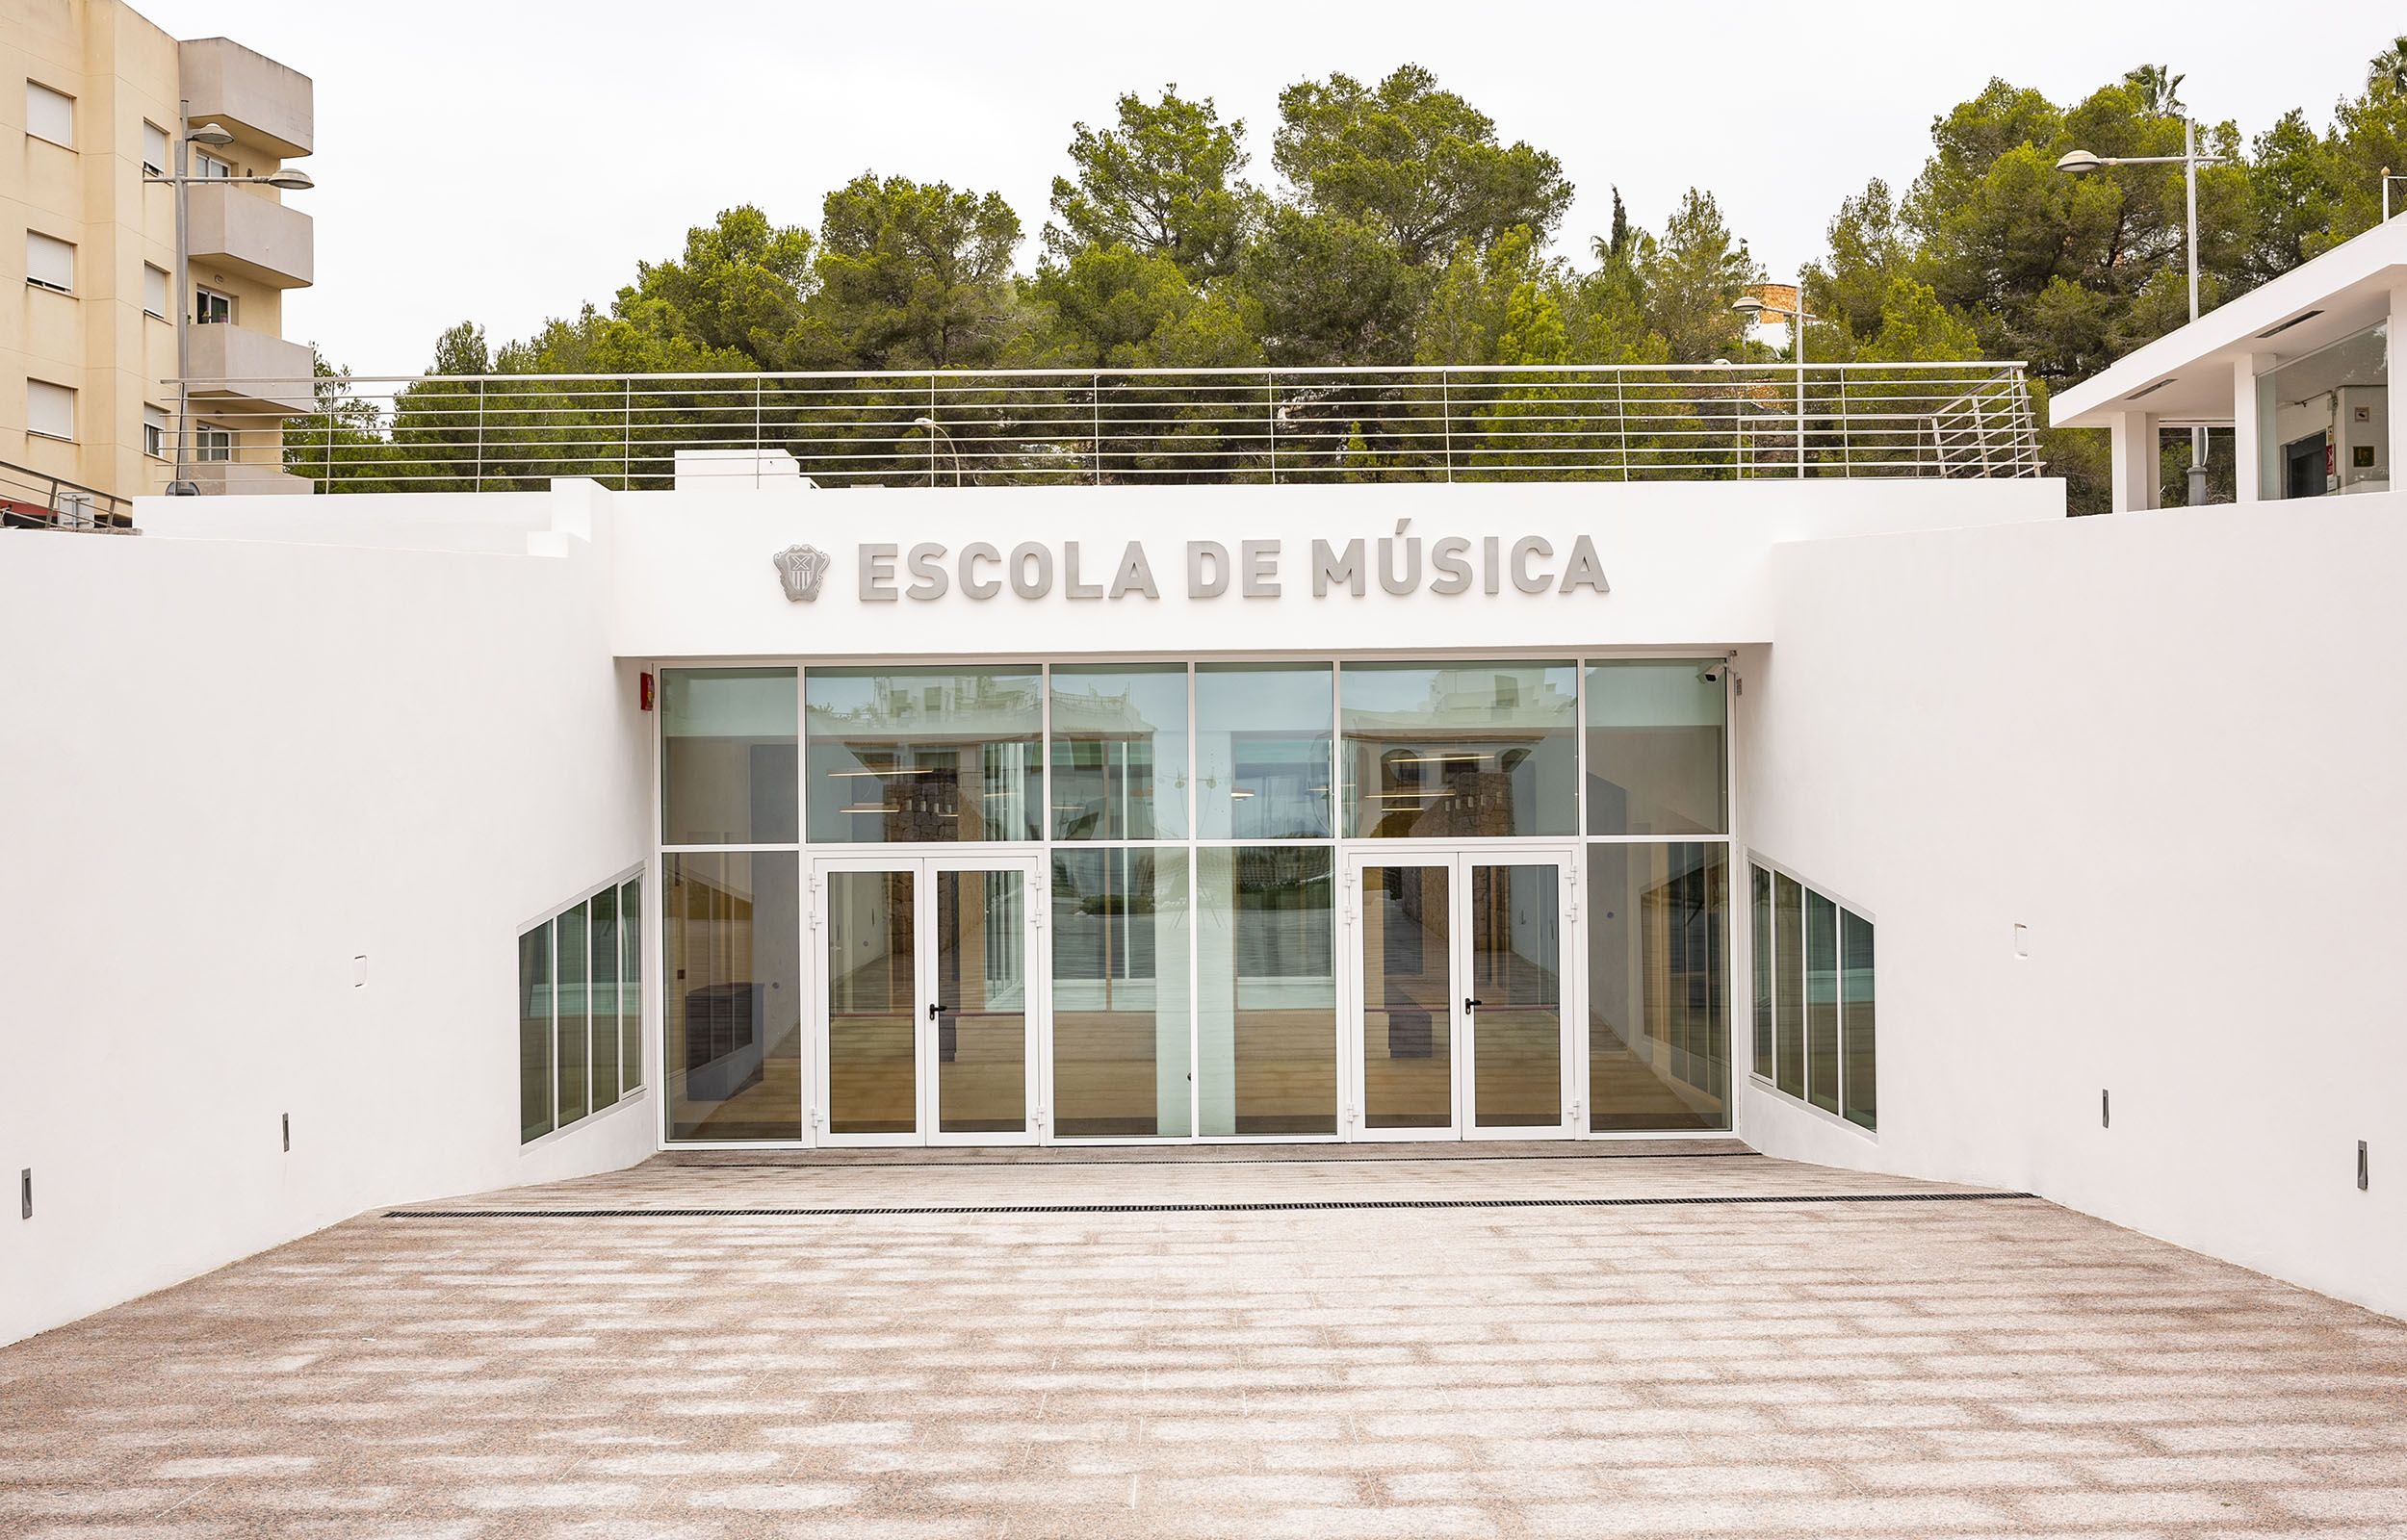 Municipal music college